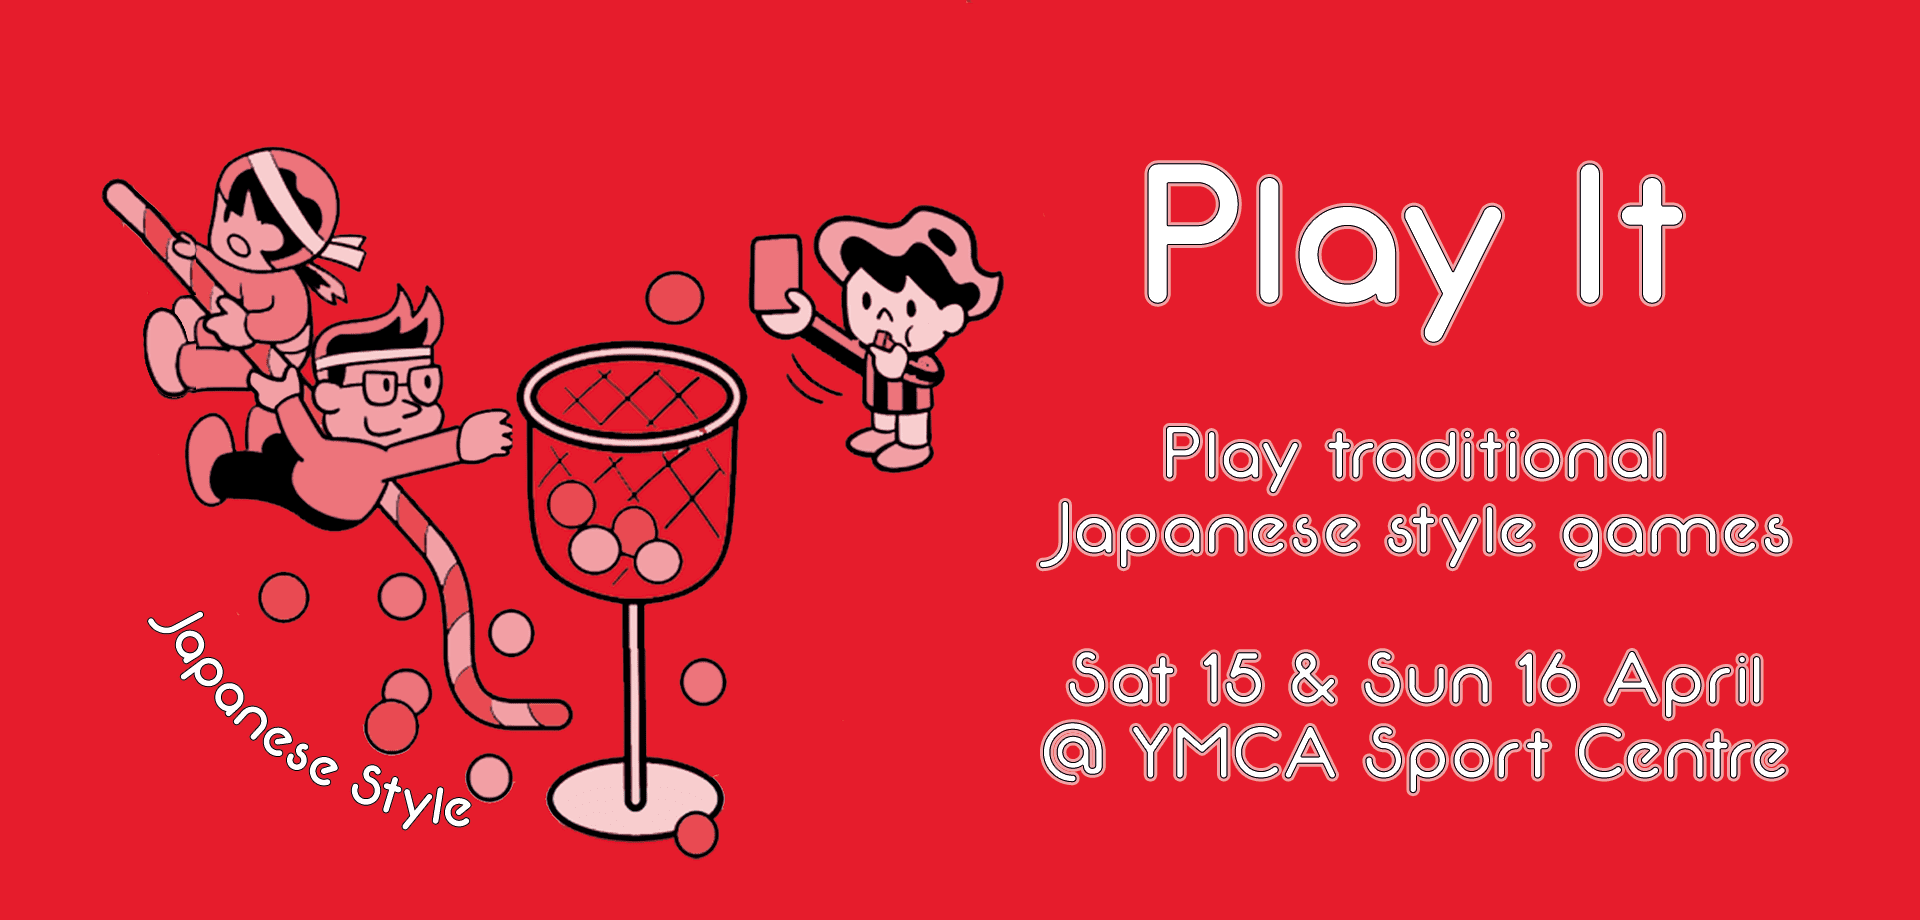 Play It Japan logo - landscape with dates etc_